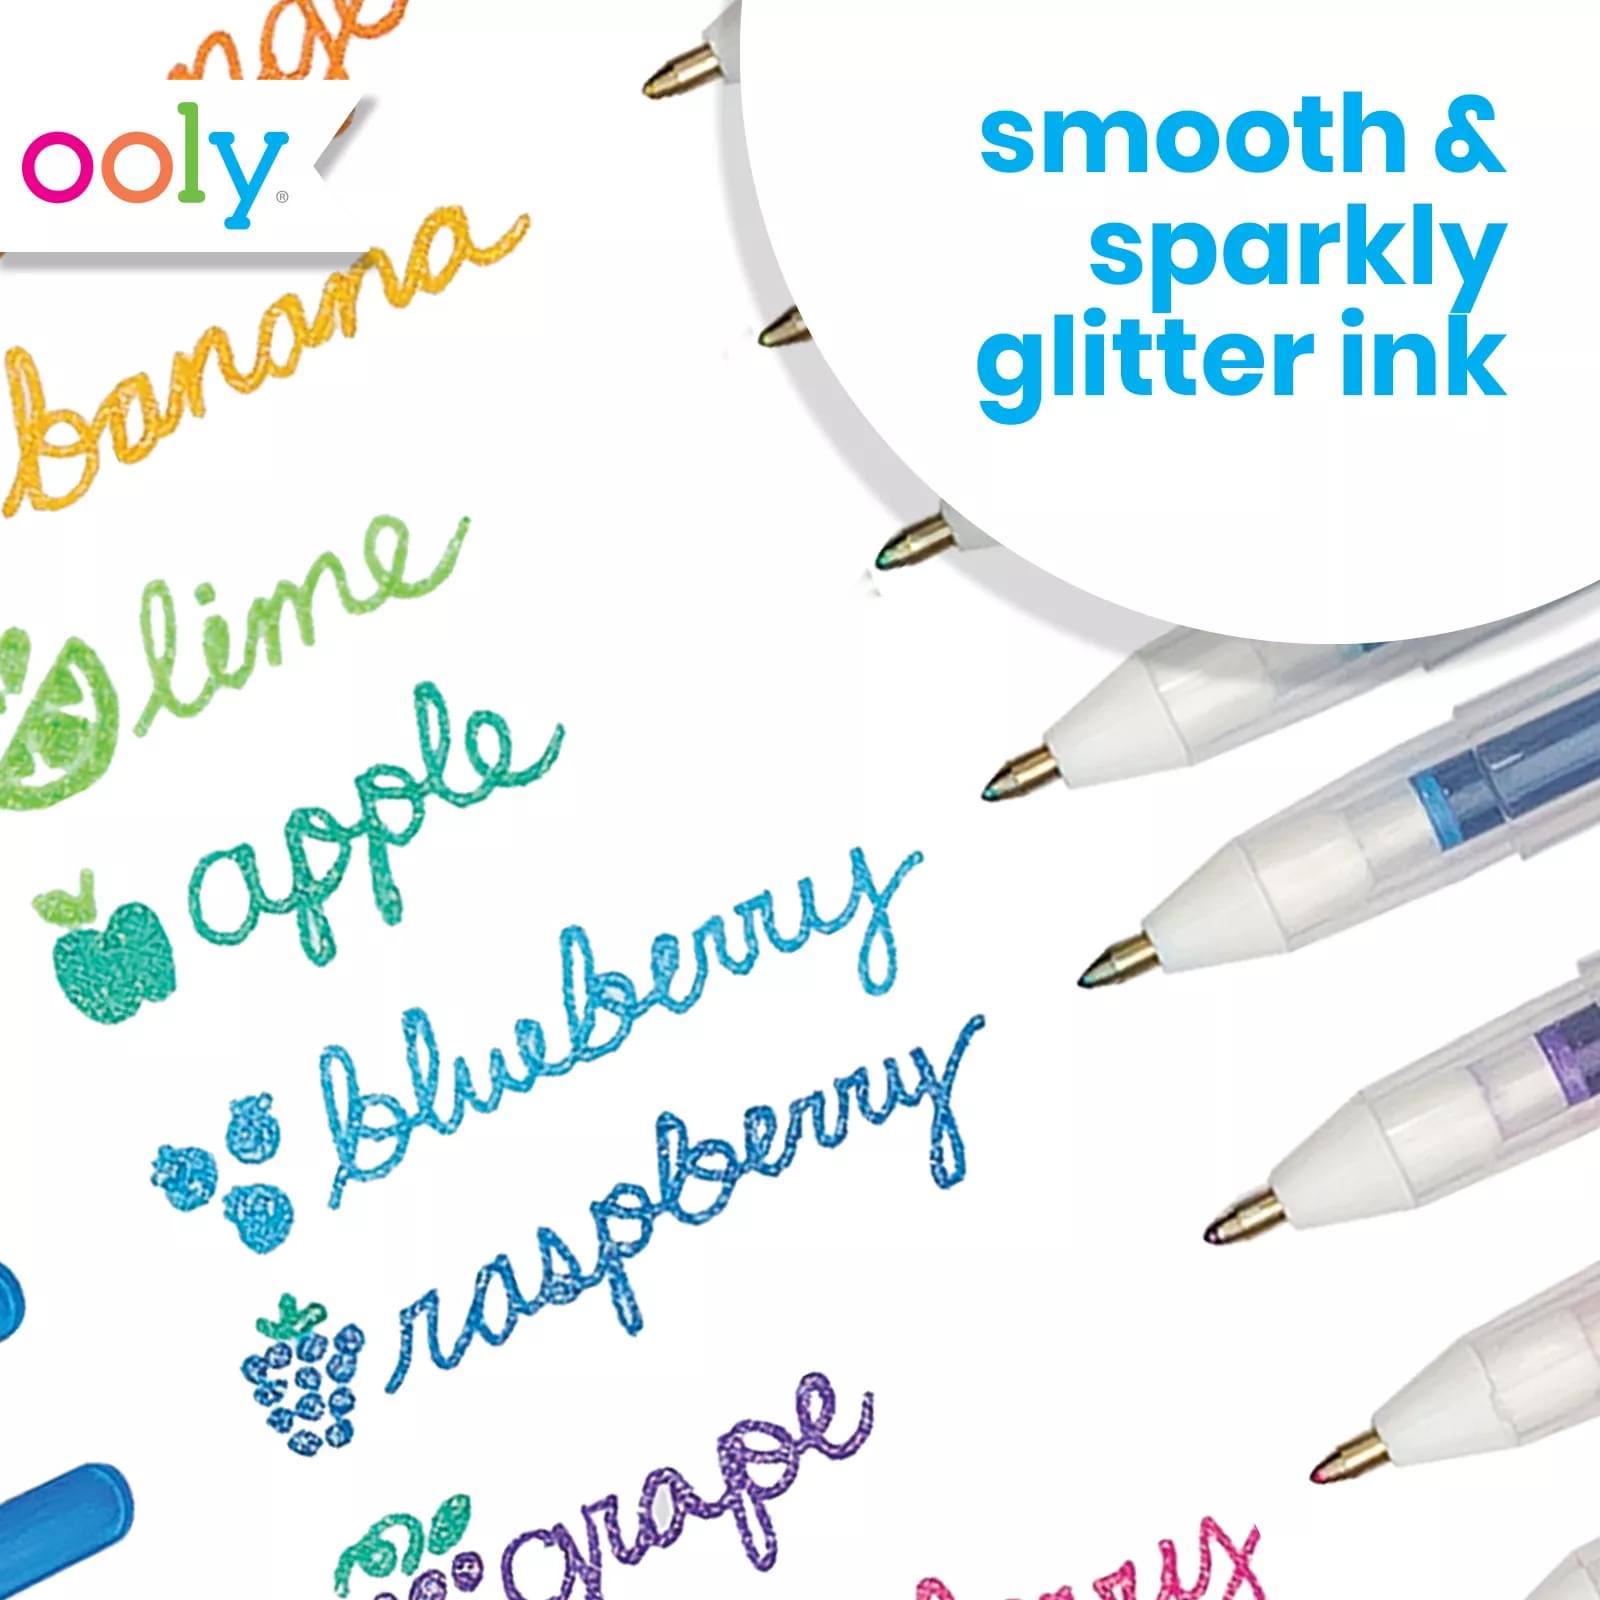 Glitter Scented Gel Pens Pack X7 - Smiggle Online